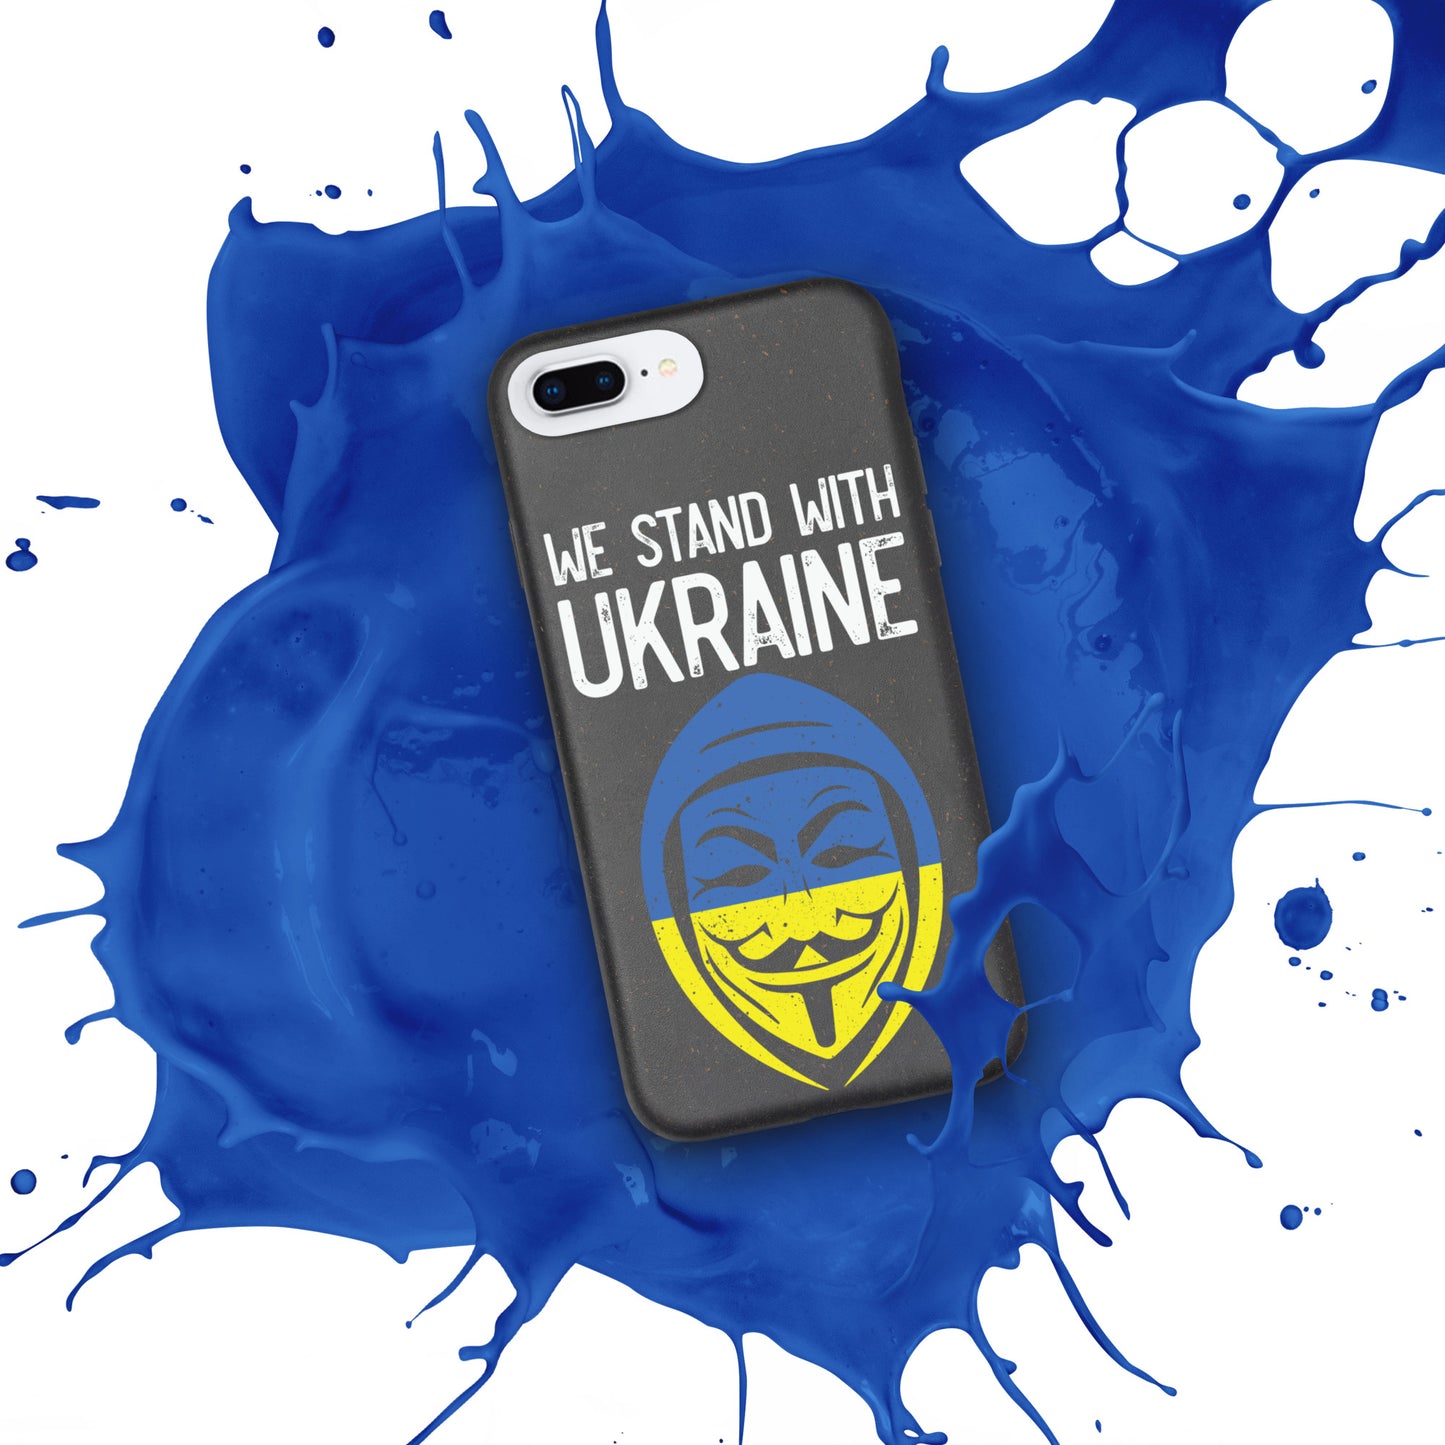 We stand with Ukraine veni vidi vici | Speckled iPhone case